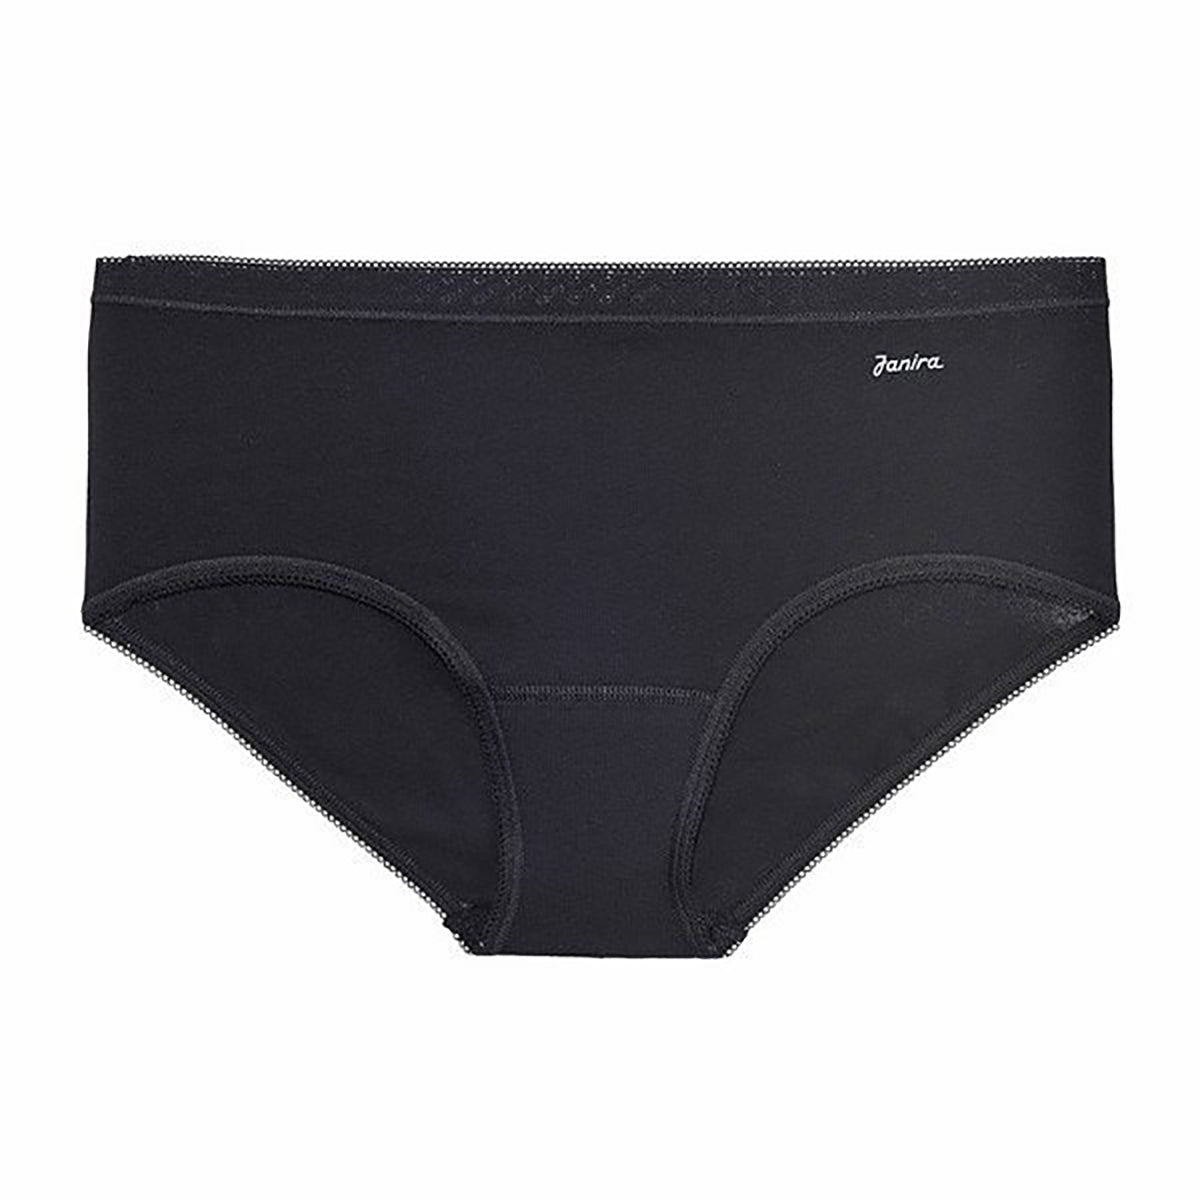 Janira essential cotton panty brief lingerie canada black underwear linea intima multi pack